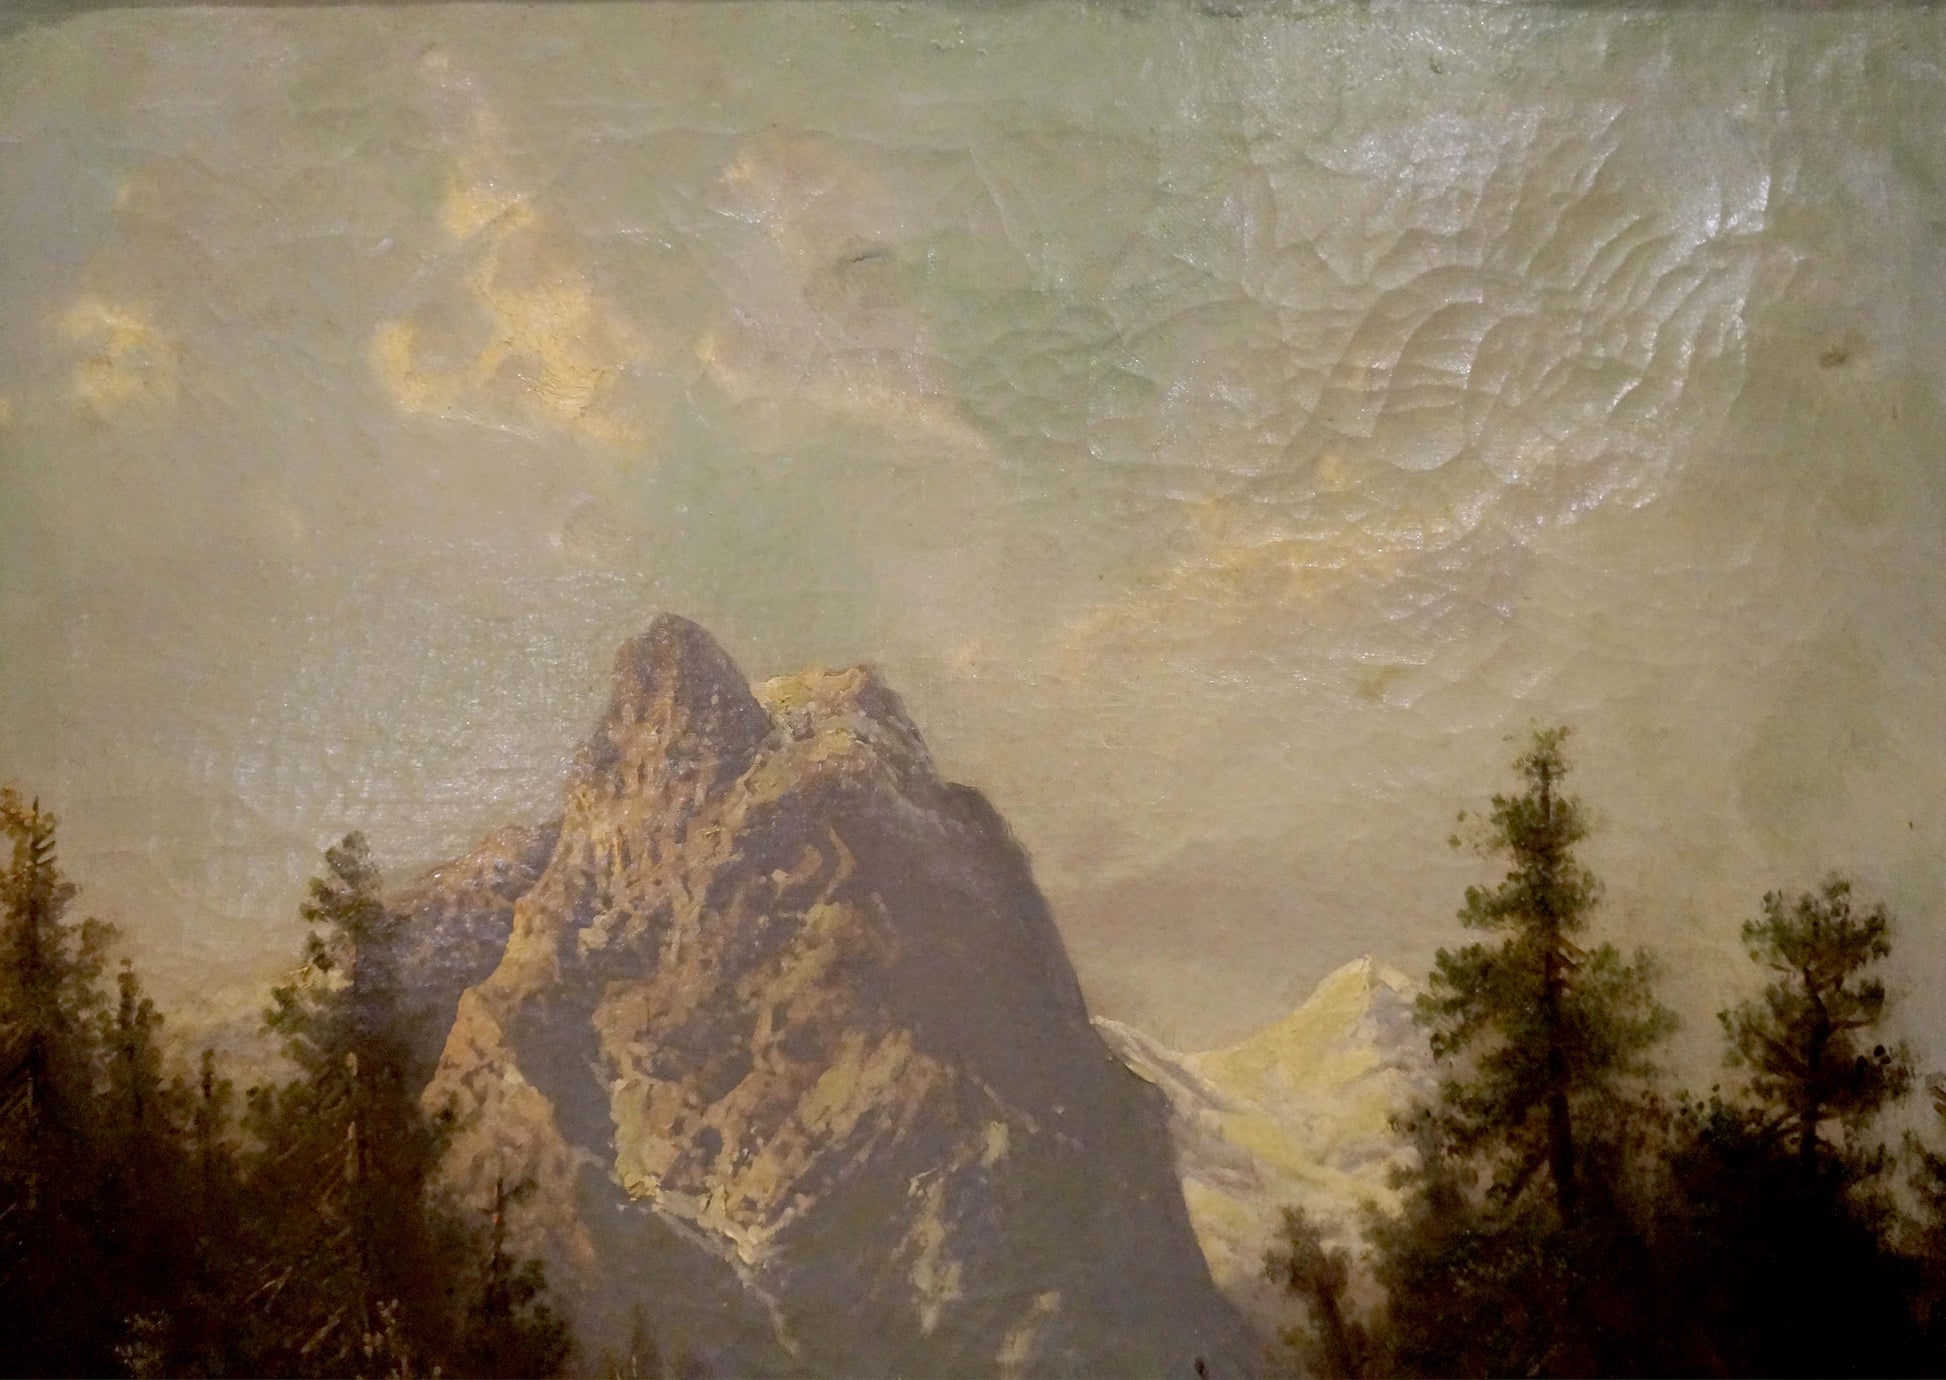 Karl Kaufman's oil painting capturing "Nature"